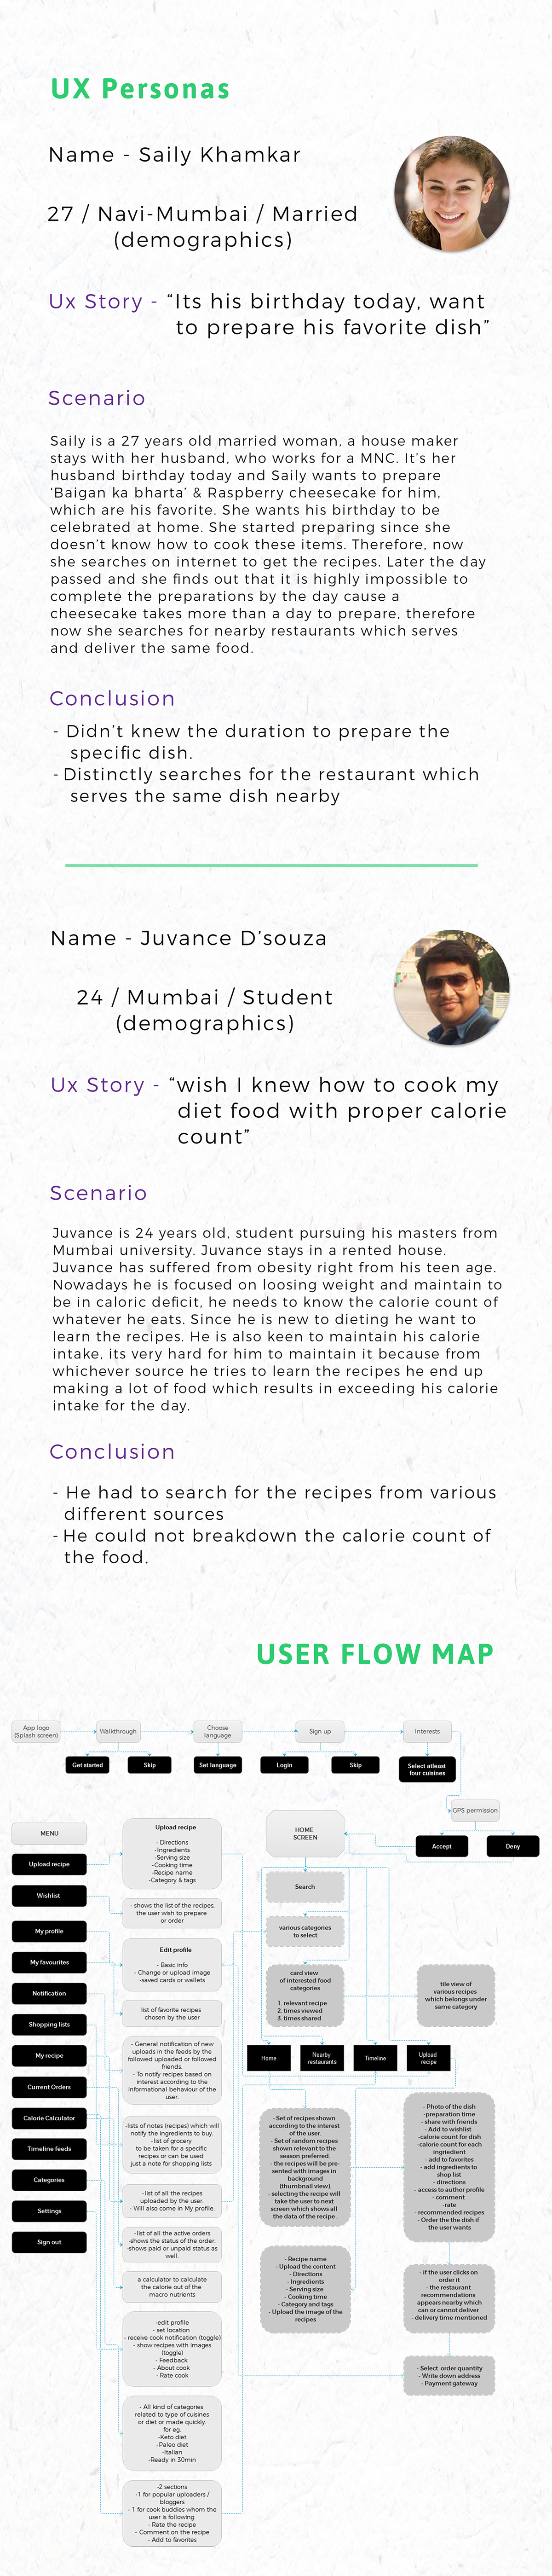 cook recipe app recipe uiux UX Case Study design Food  UX PLAN Case Study UX strategy